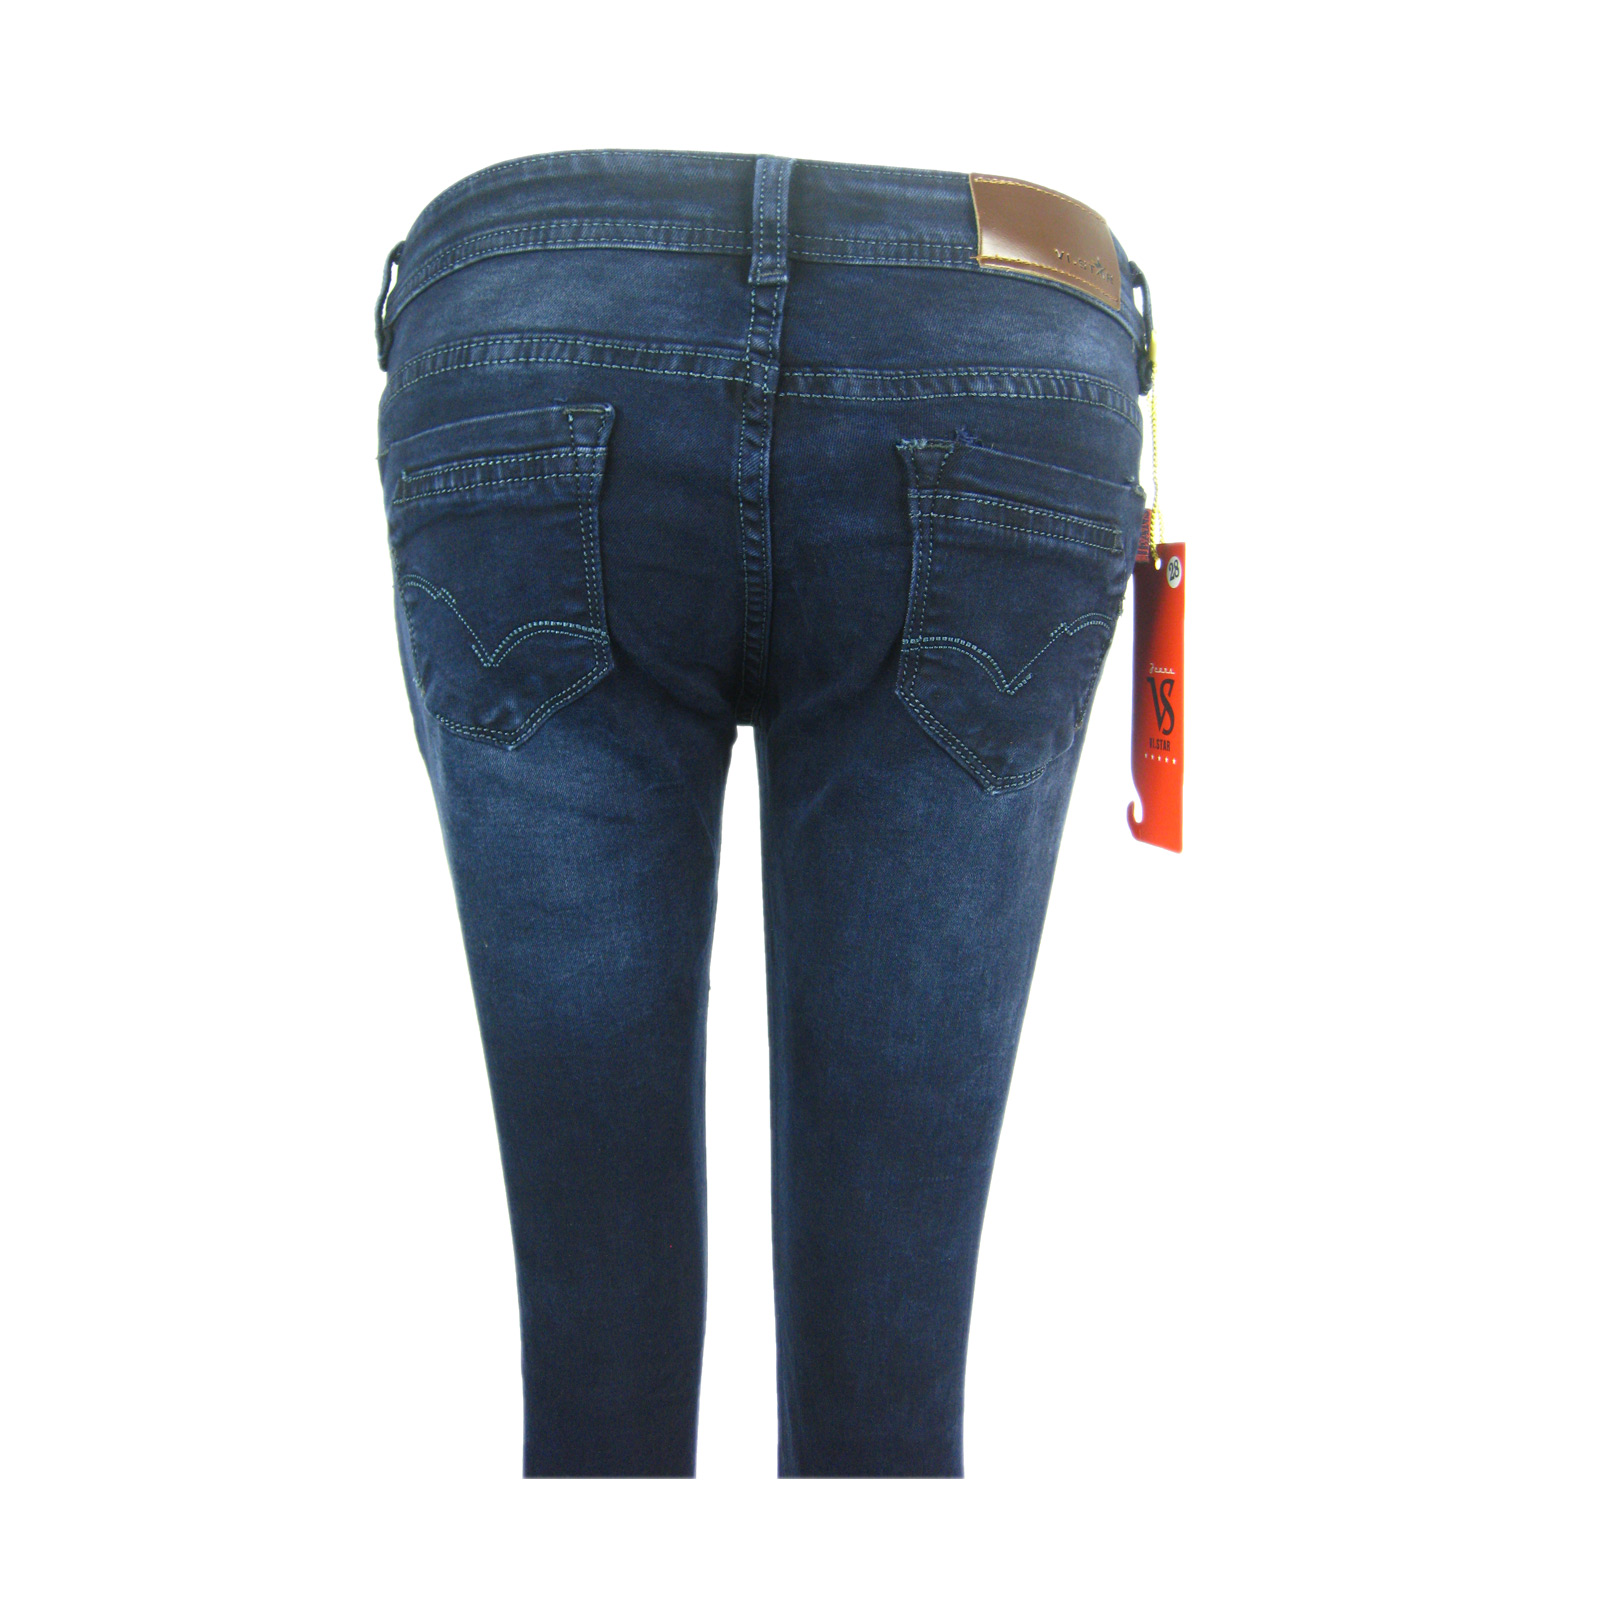 Quần jeans Nữ 498 2.